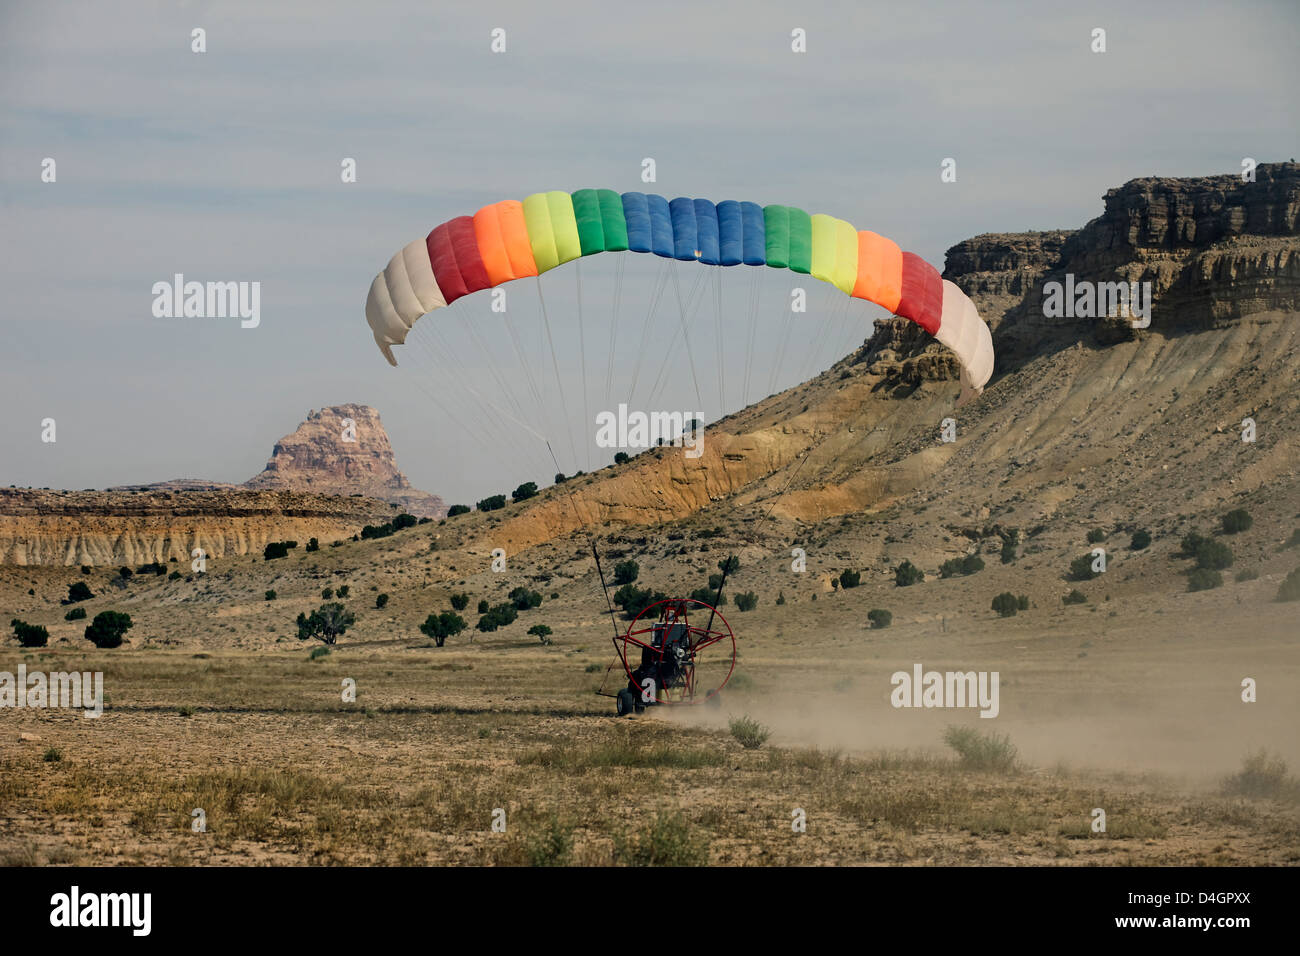 Aircraft Ultralight parachute takeoff Utah desert 0388.jpg Stock Photo